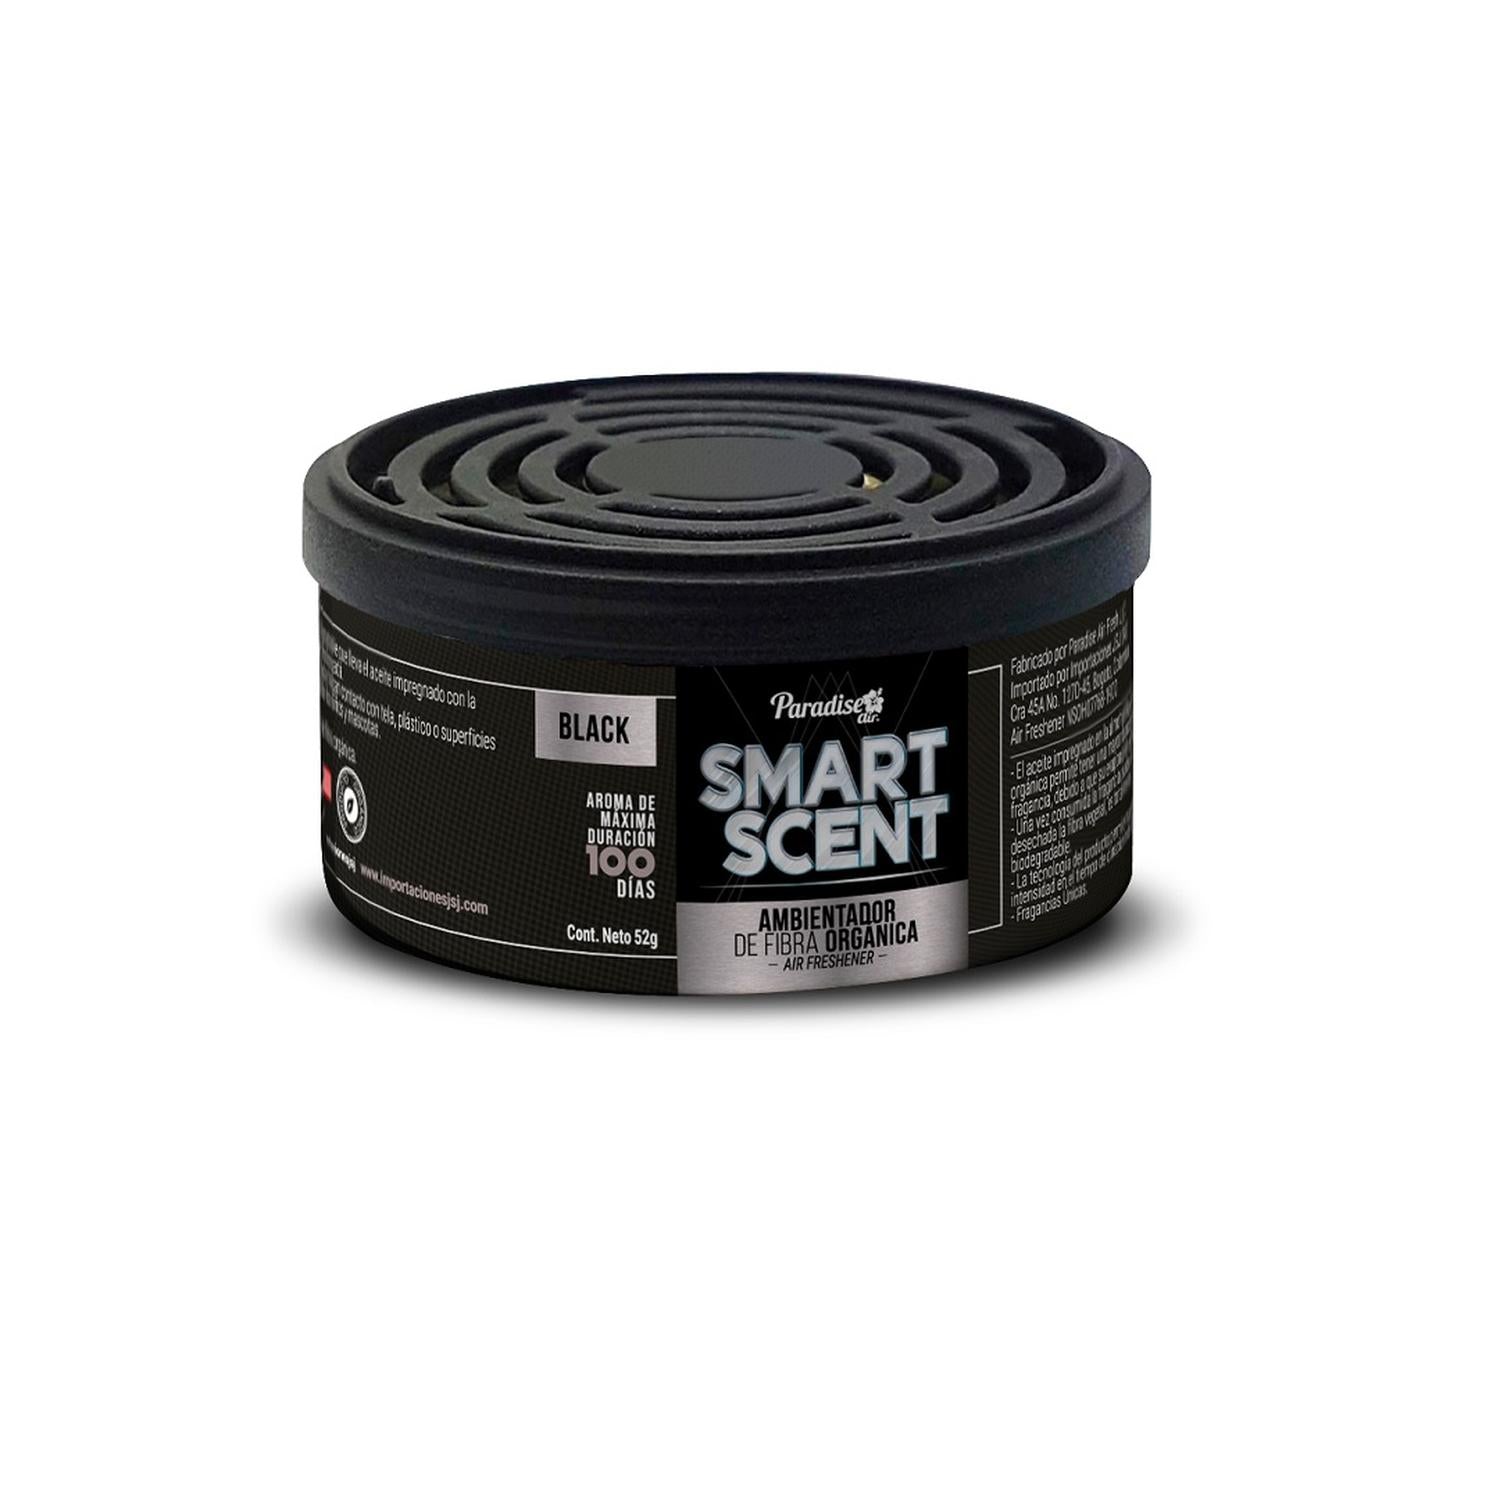 Ambientador Smart Scent 100 dias Black x4 Und Smart Scent